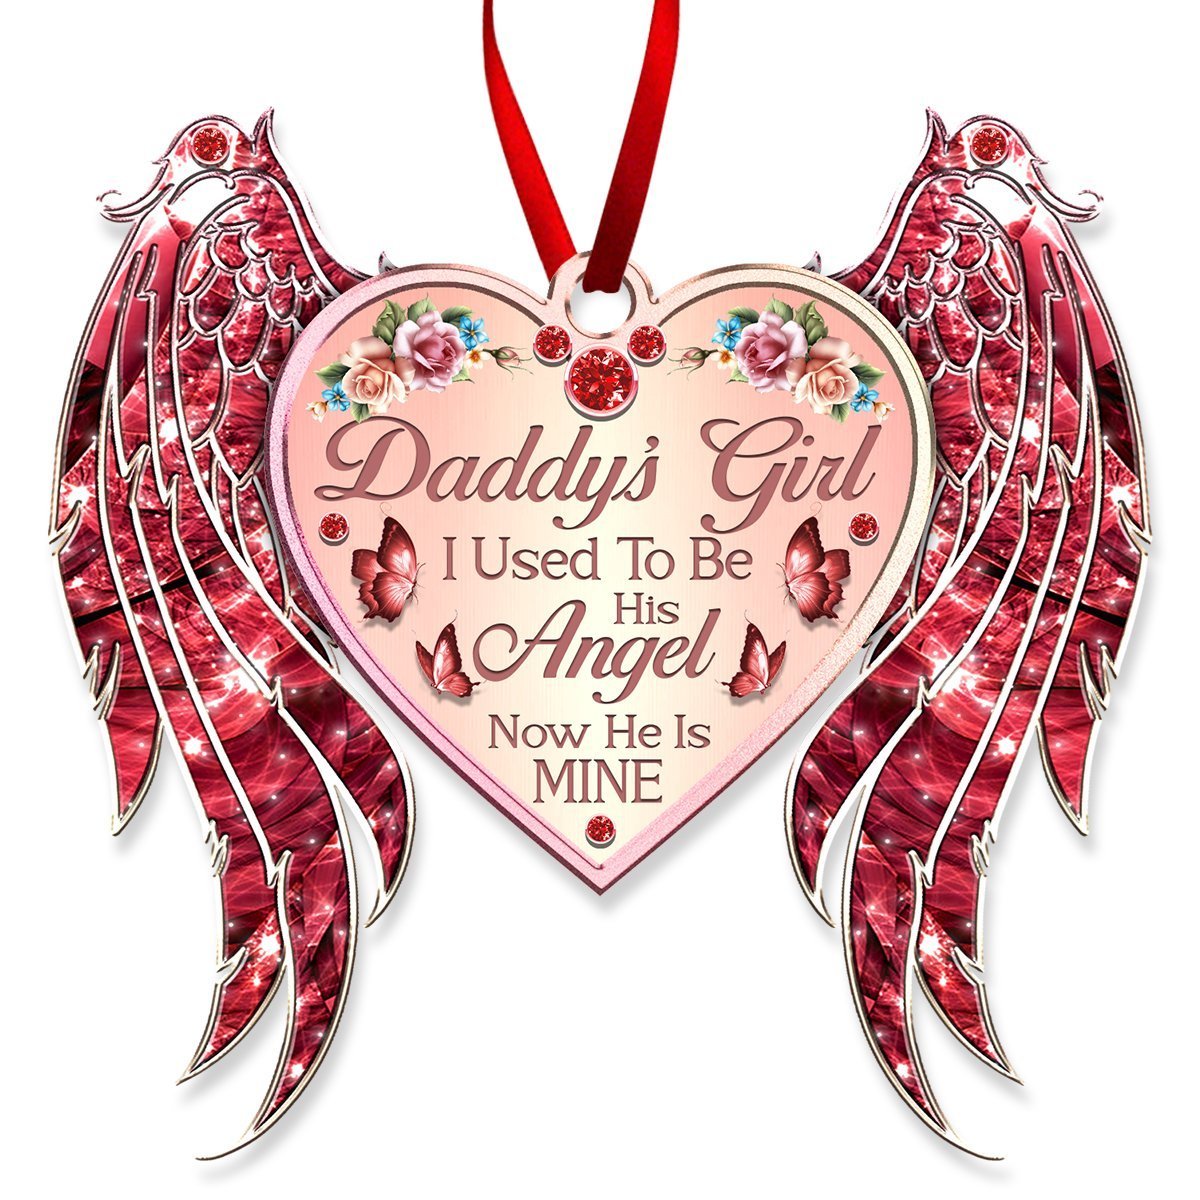 Daddy's Girl - Memorial Ornament